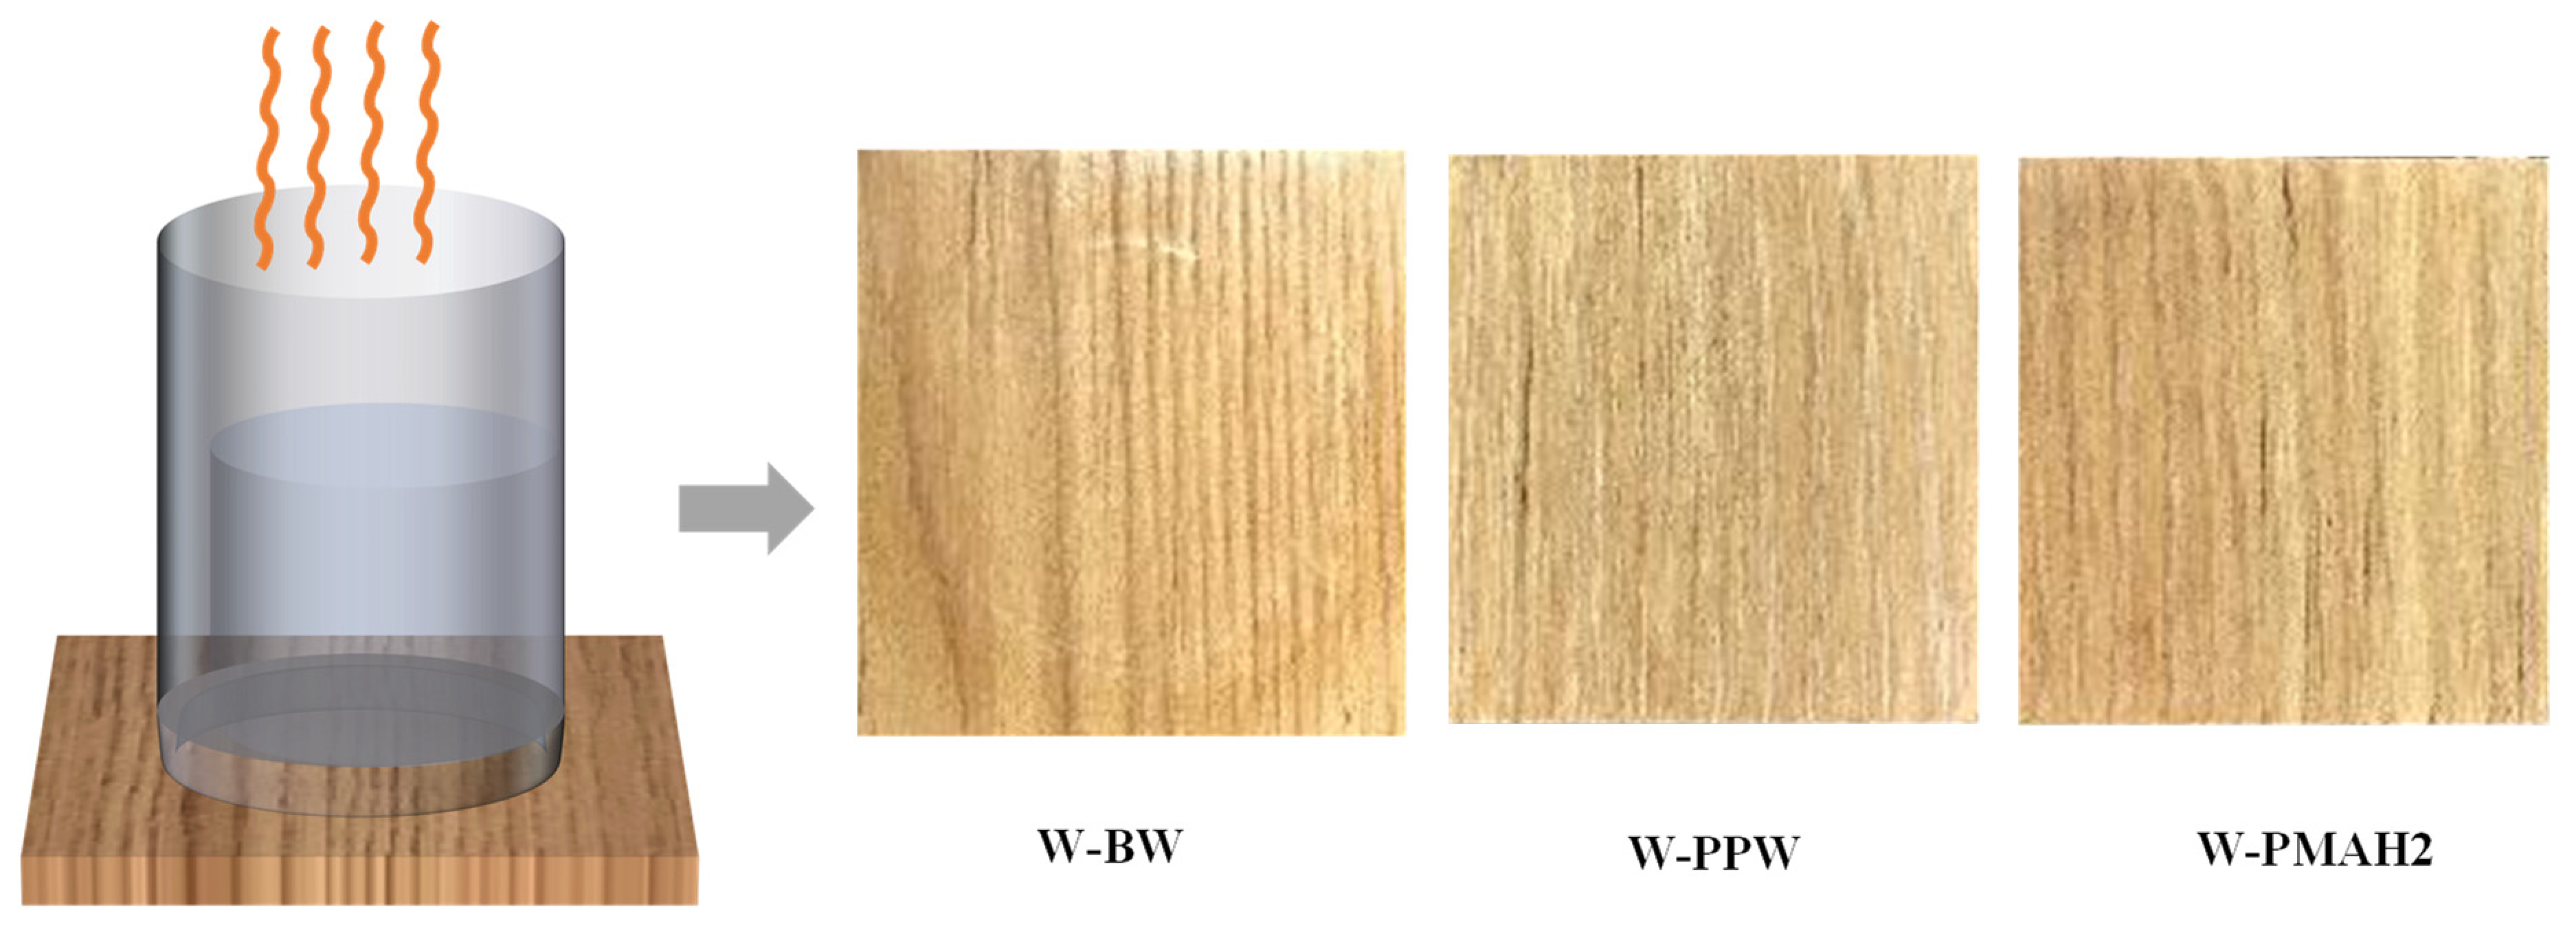 The FTIR spectrum of untreated wood and carnauba wax emulsion-treated